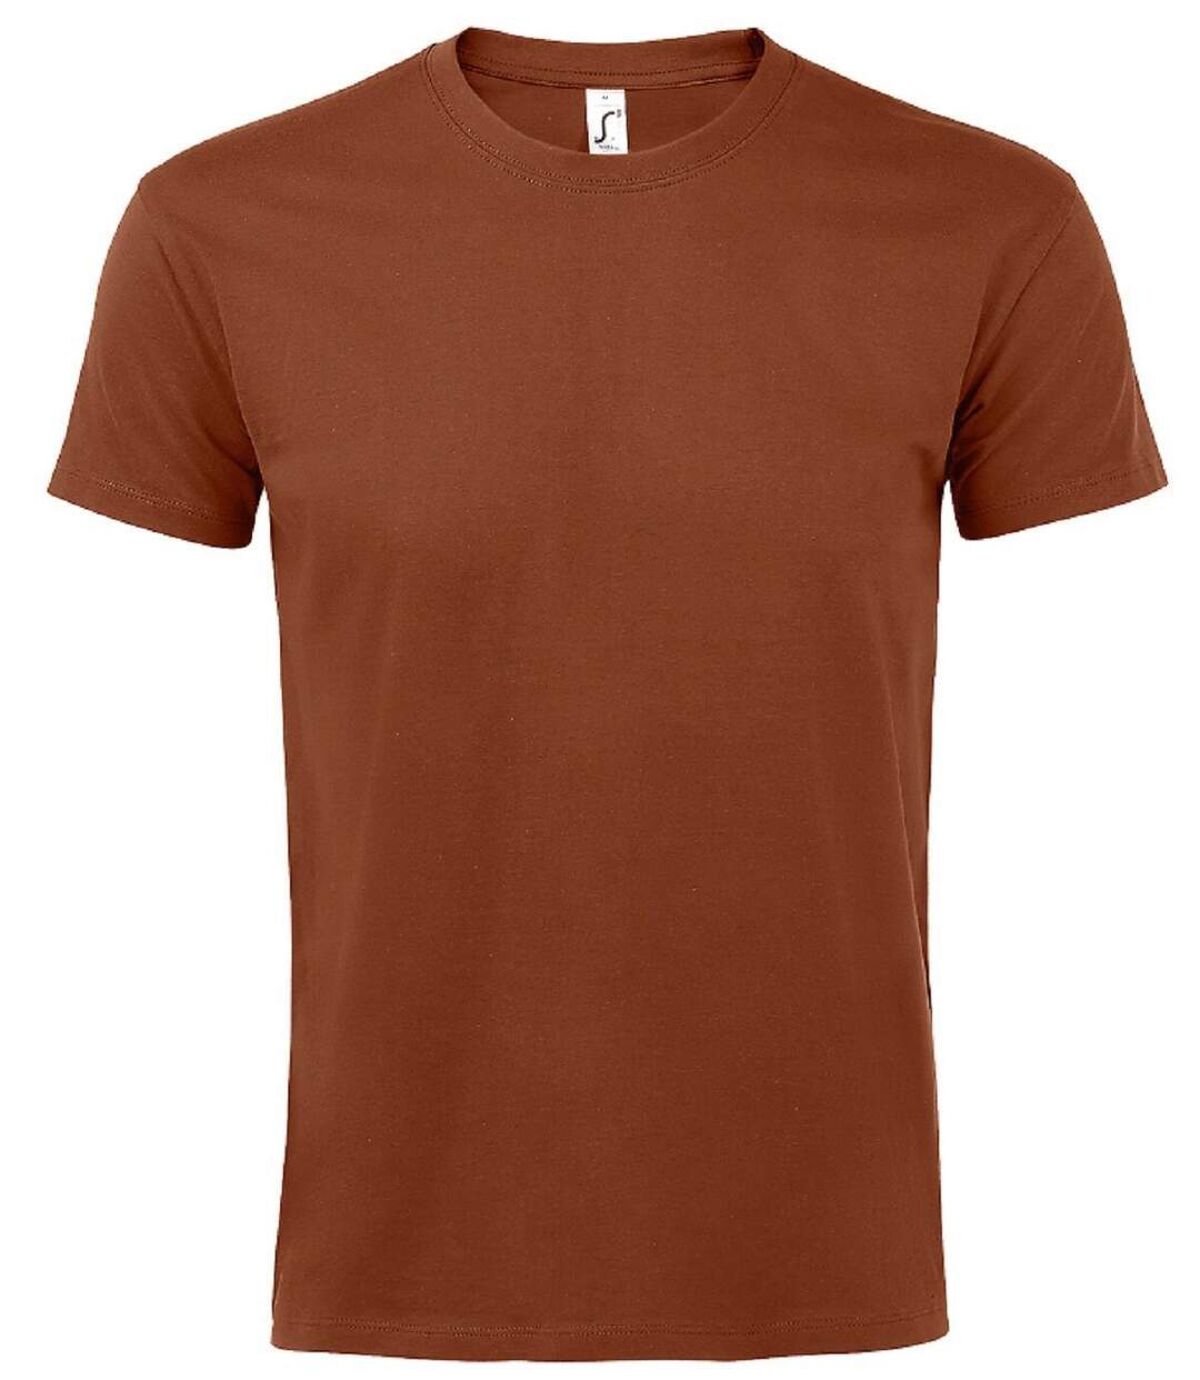 T-shirt manches courtes - Mixte - 11500 - marron terracotta